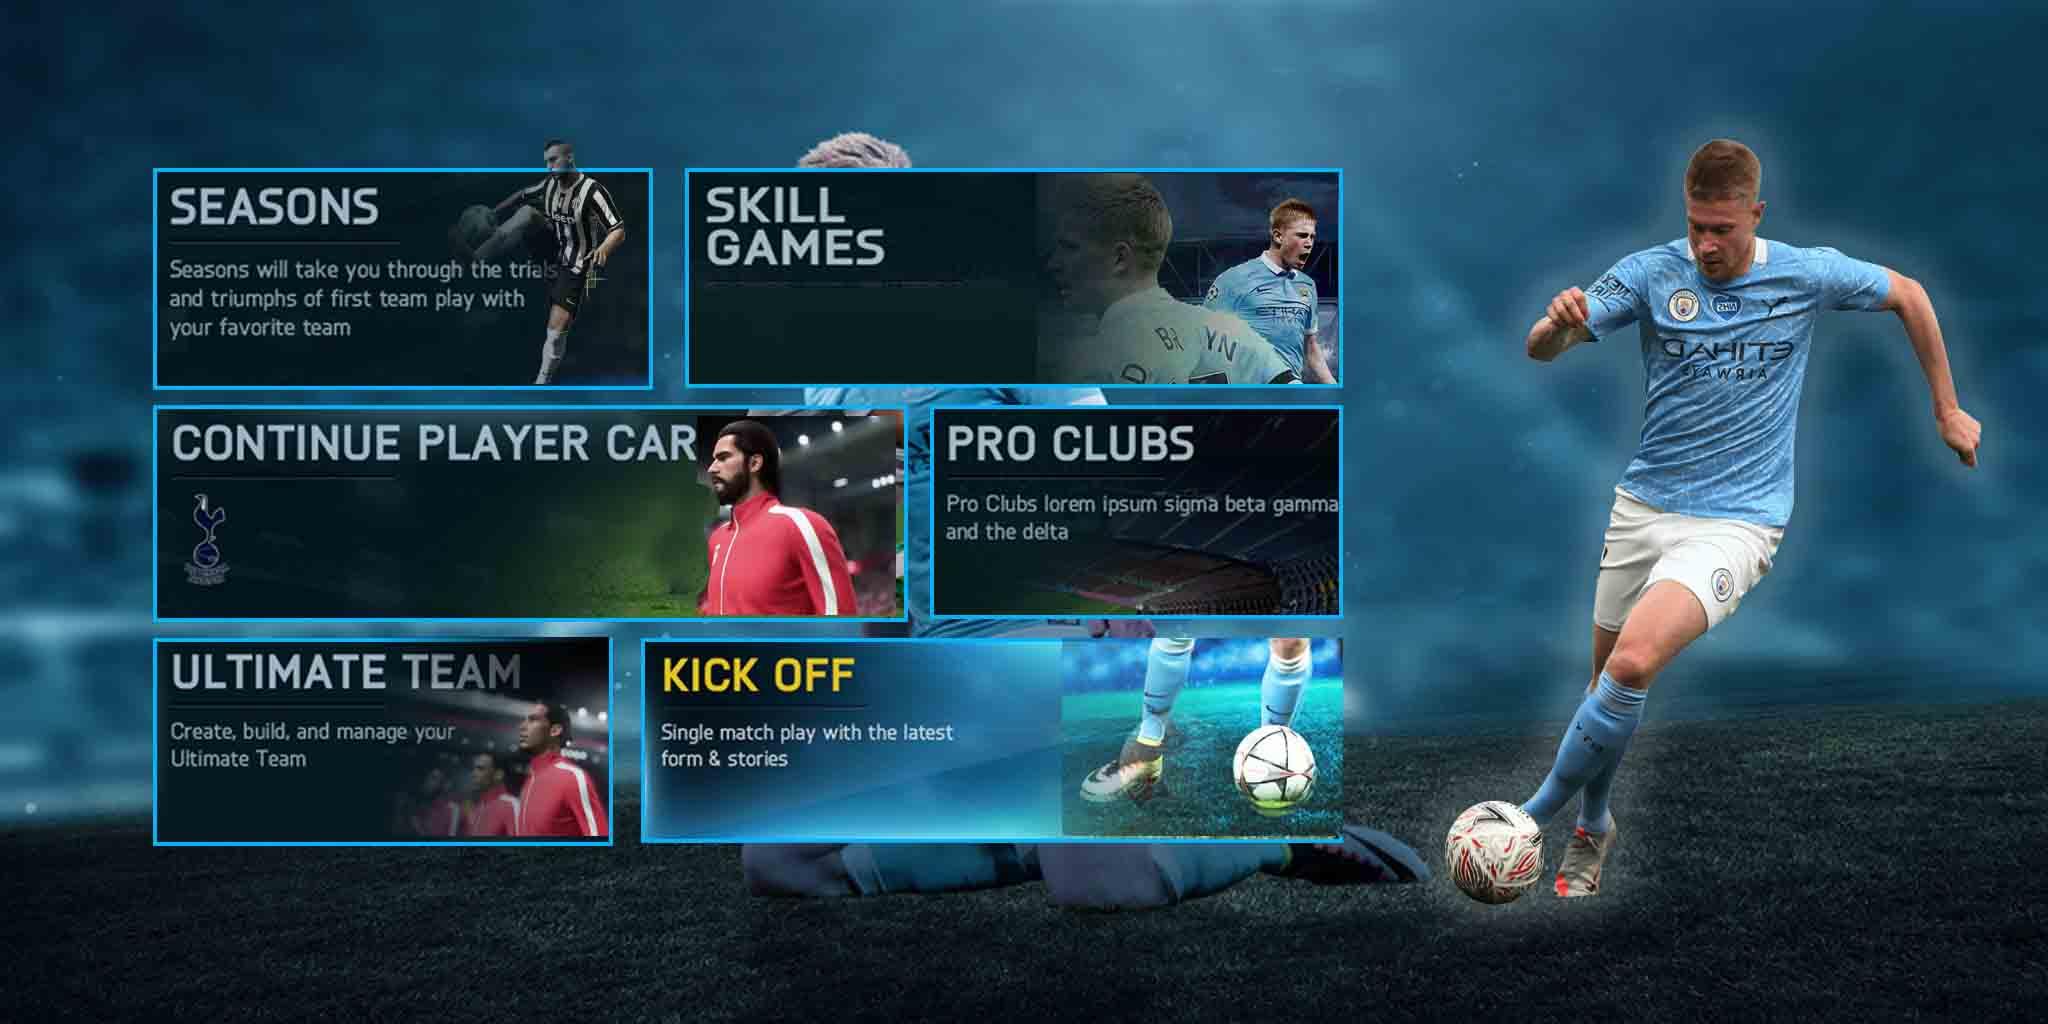 Download FIFA Soccer for PC - EmulatorPC